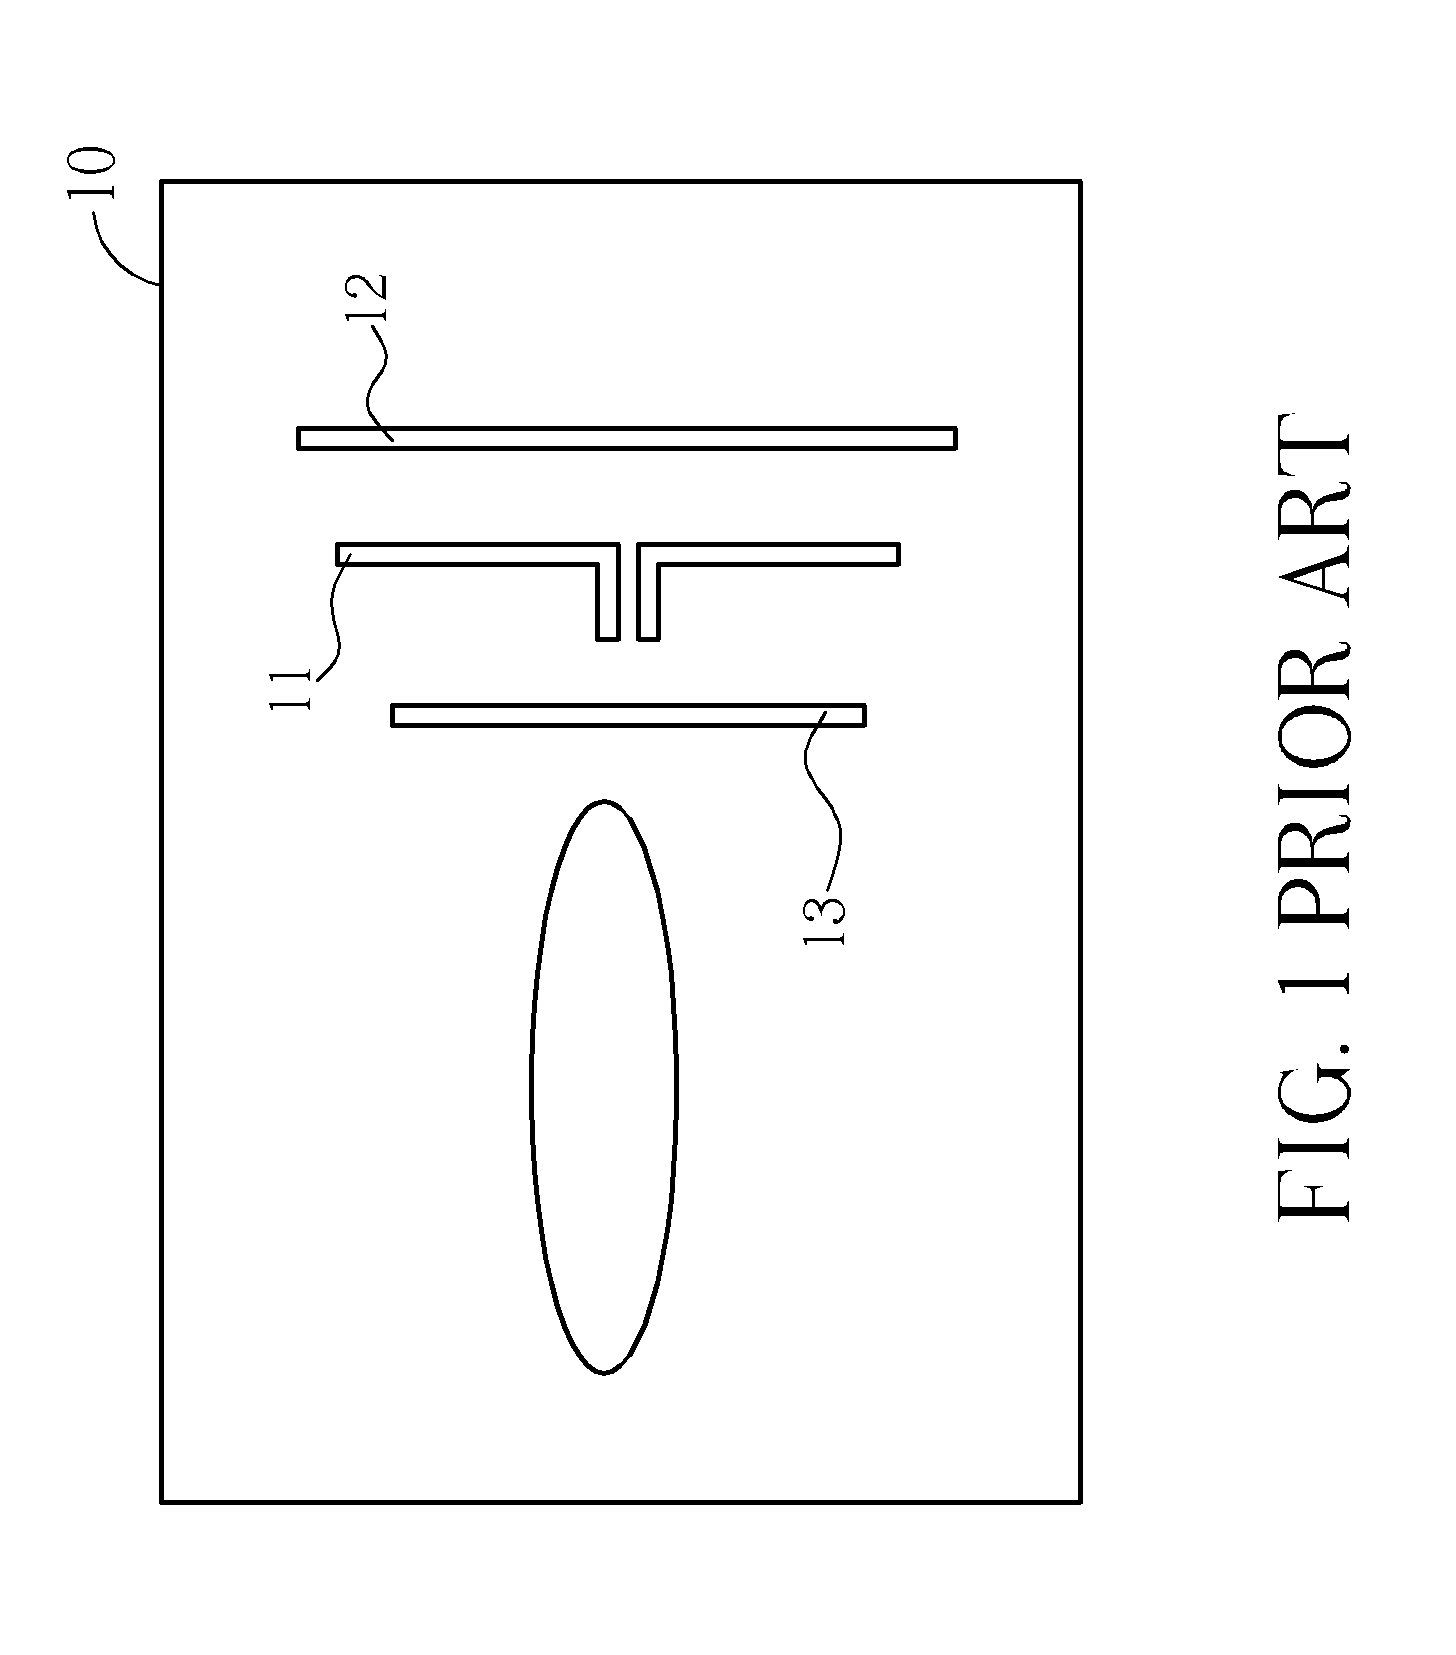 Printed Dual-Band Yagi-Uda Antenna and Circular Polarization Antenna